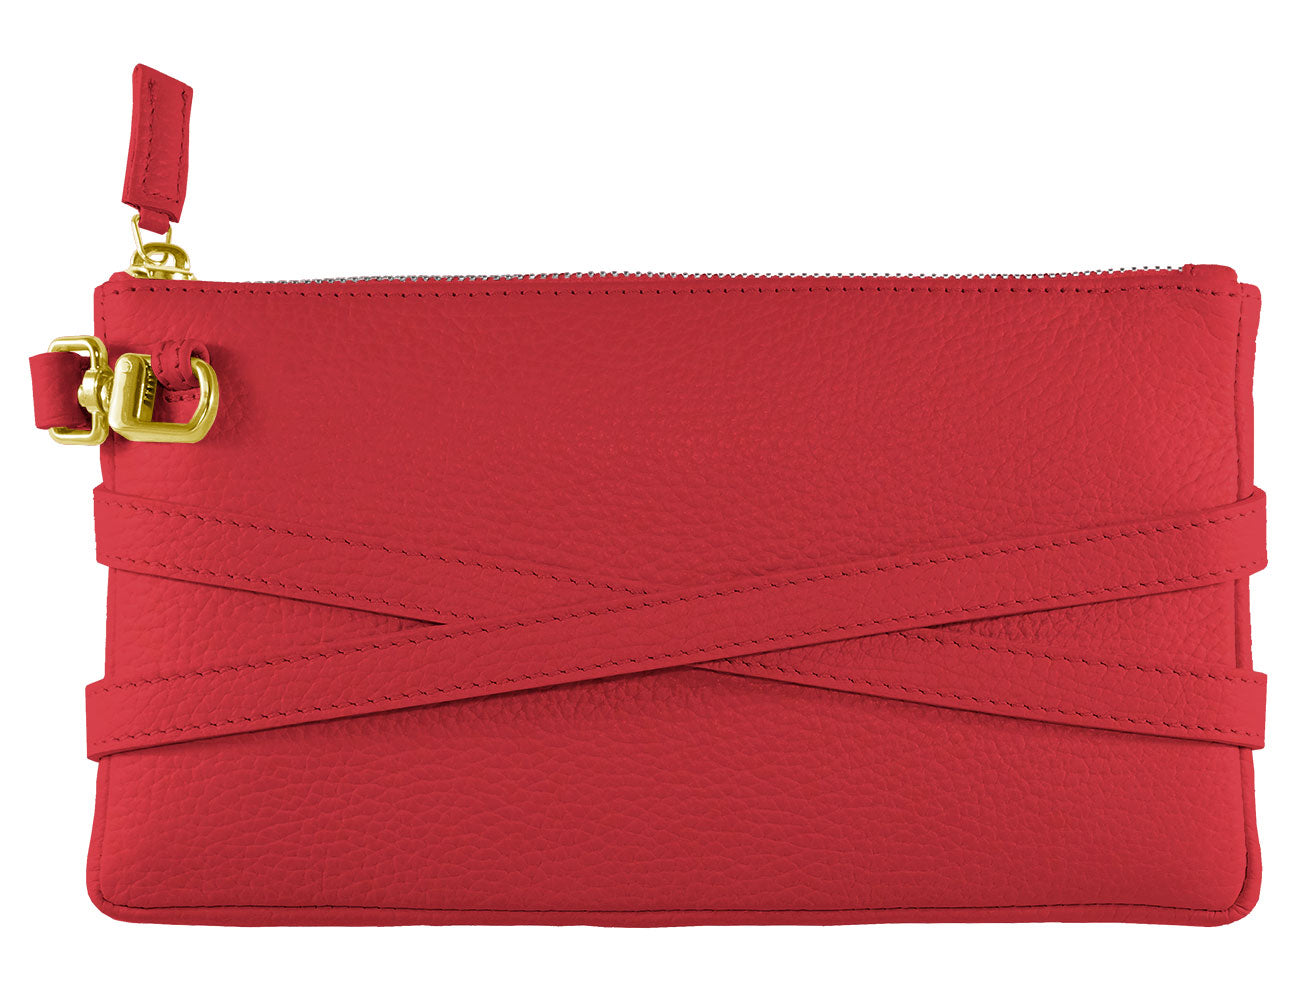 minibag red Edition GOLD, Ledertasche rot, Clutch rot, Rückseite minibag, Geldtasche zum Umhängen